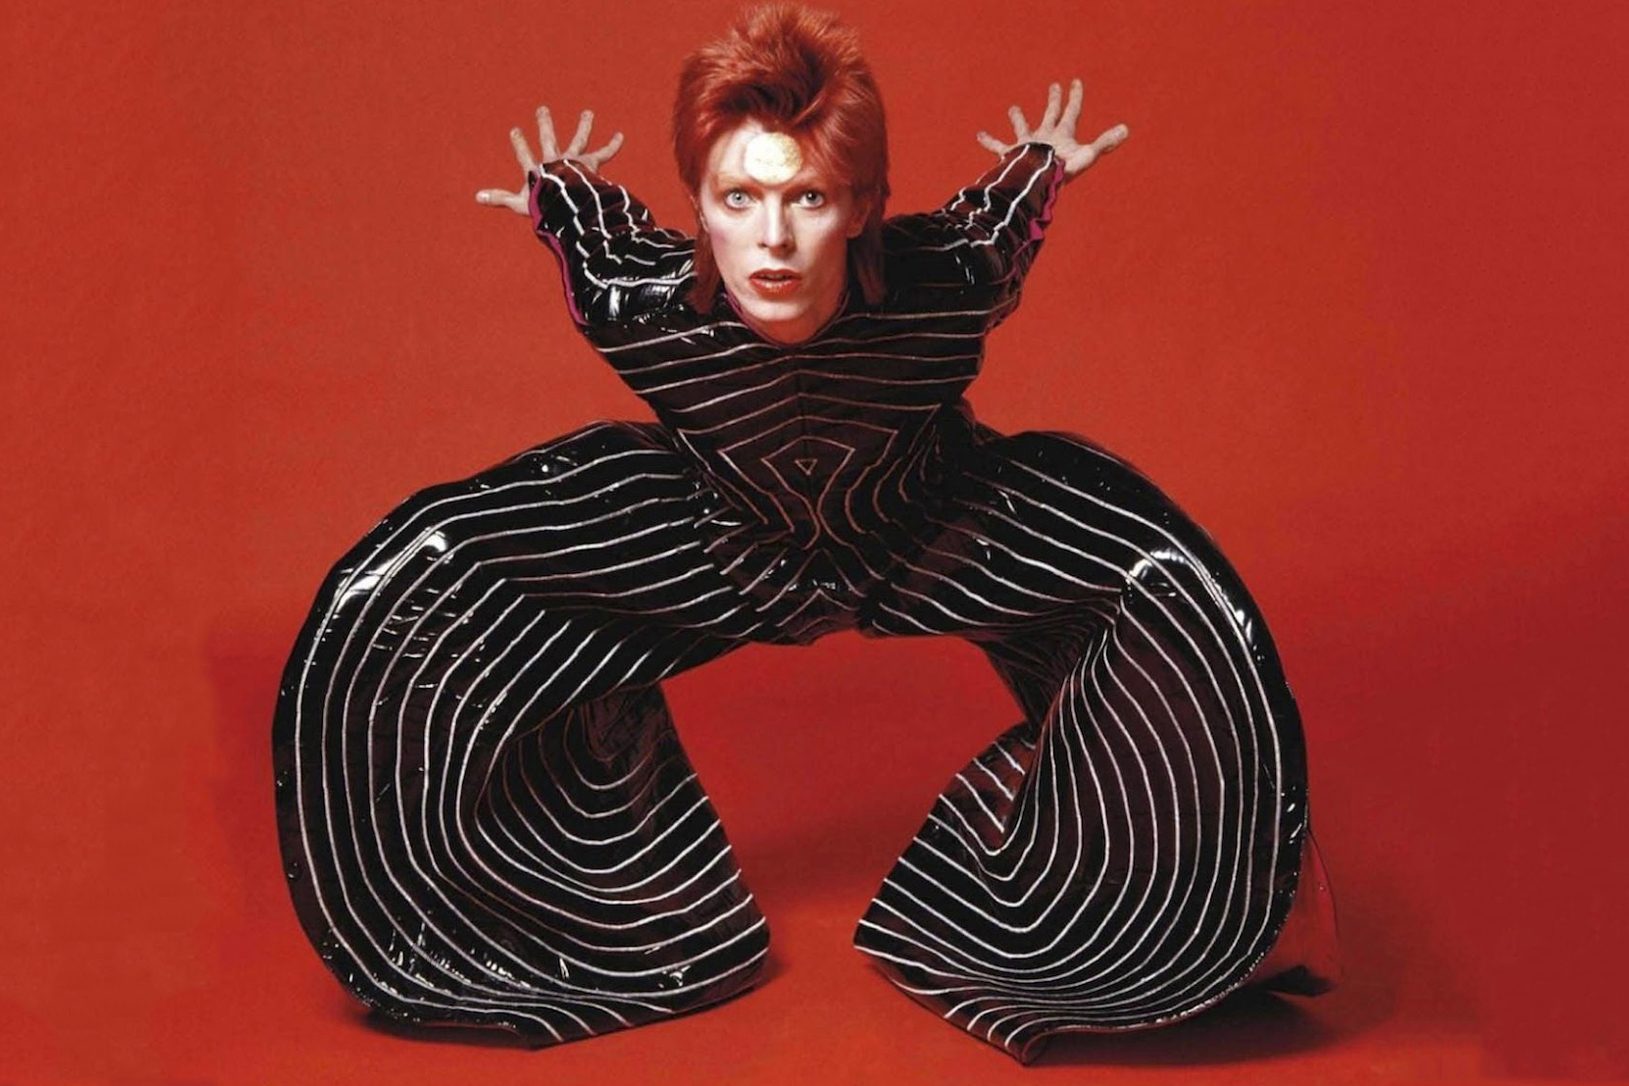 Kansai Yamamoto, Bowie Show Costume - Maison Sensey